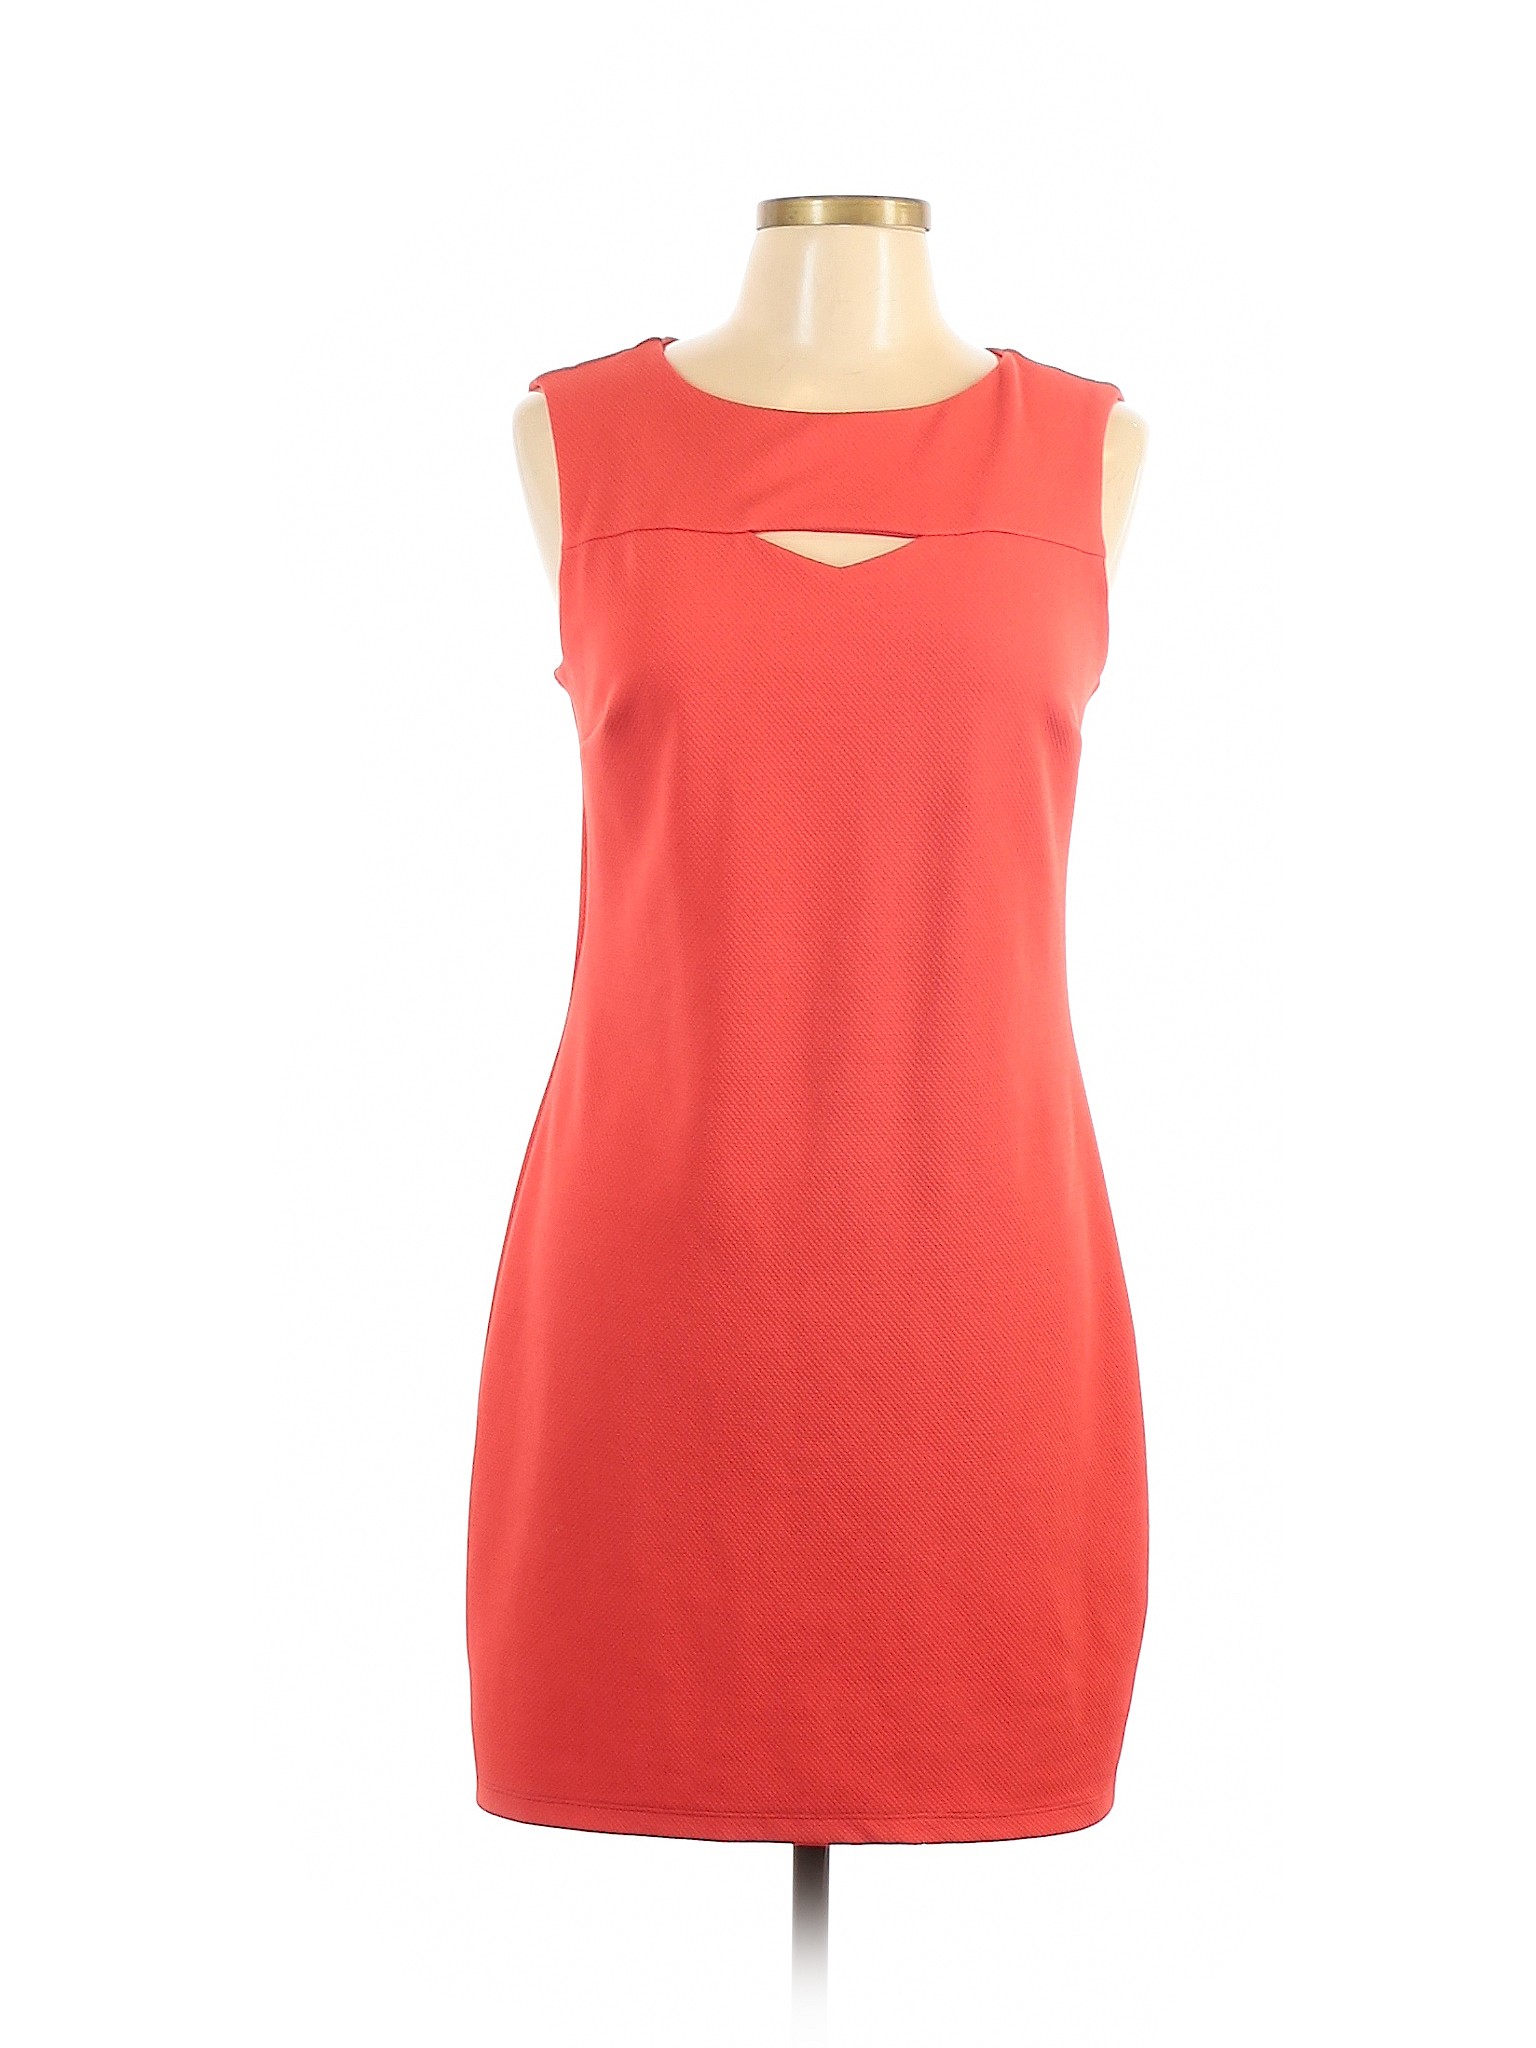 Enfocus Women Orange Casual Dress 12 Petites | eBay